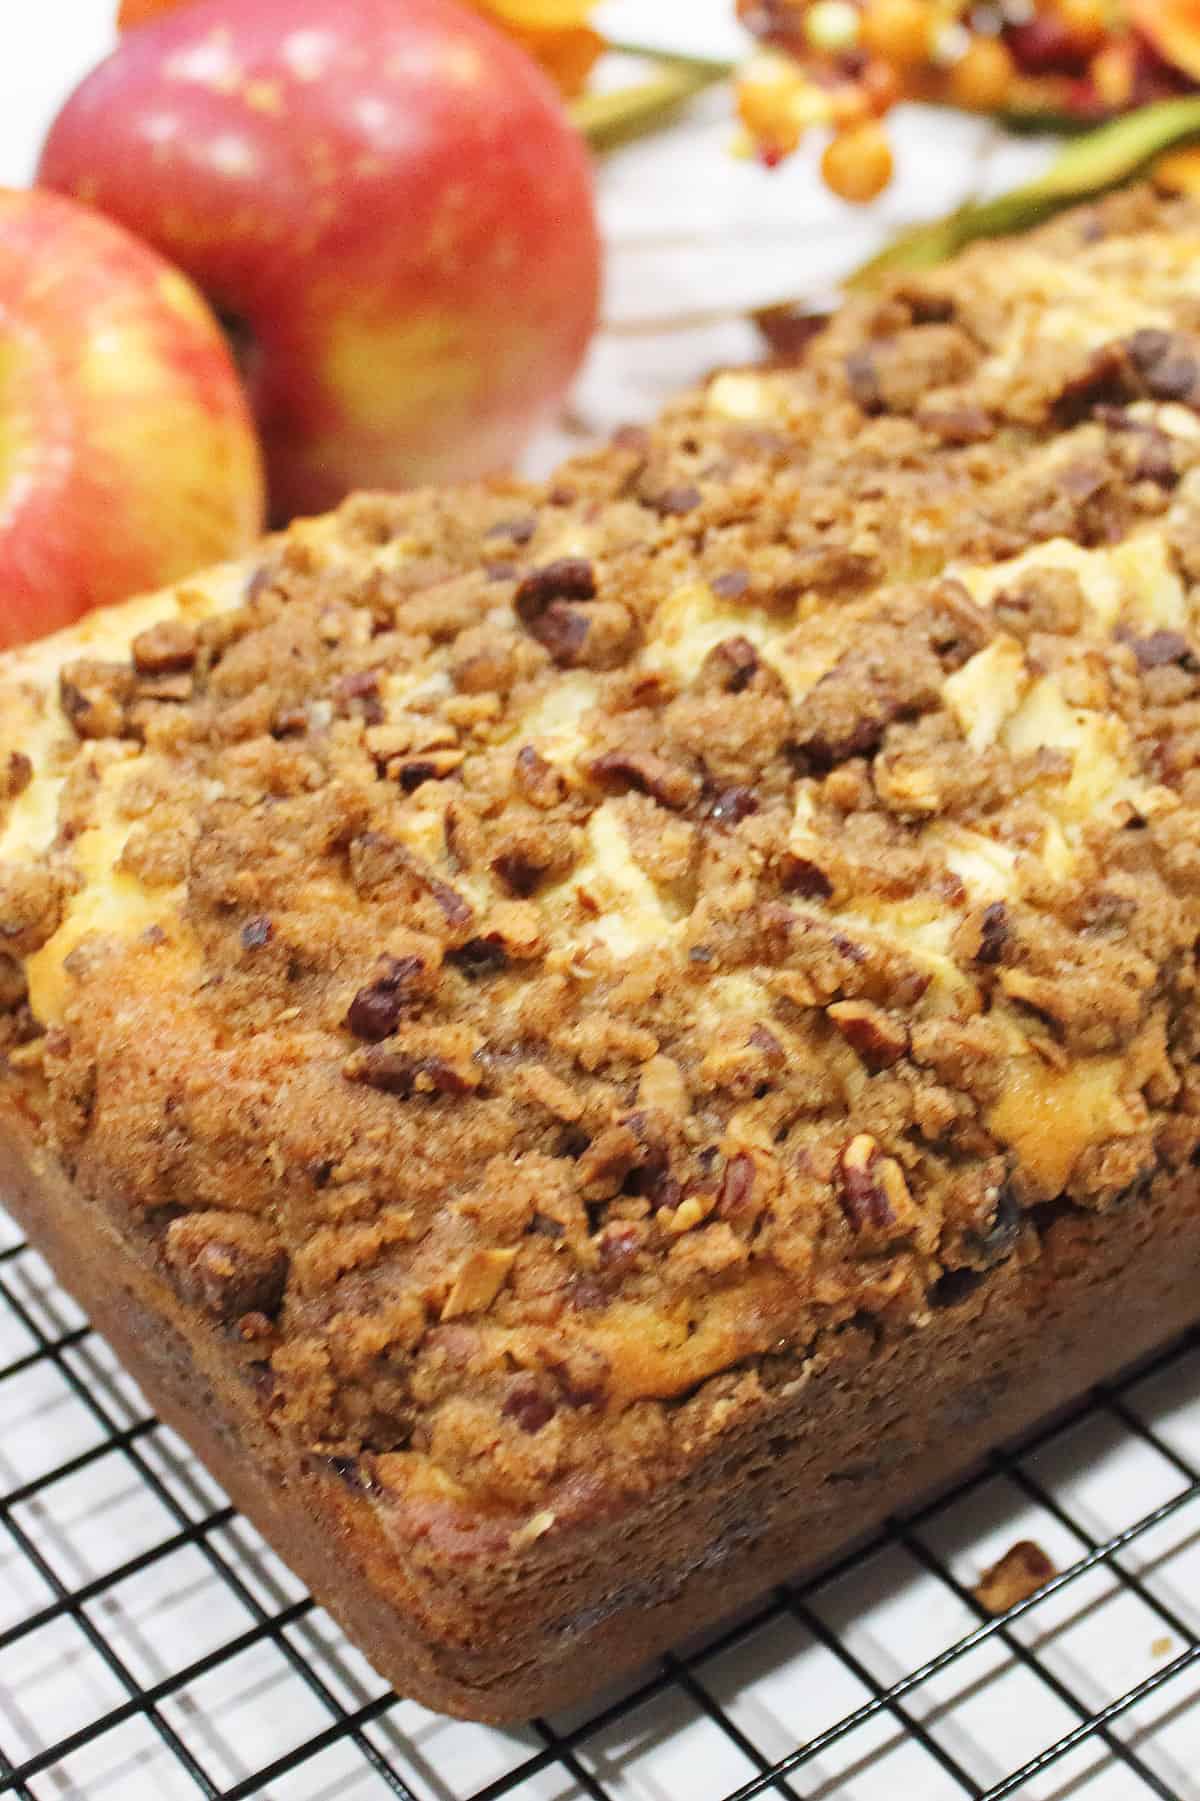 Closeup of crumbs on top of apple bread.